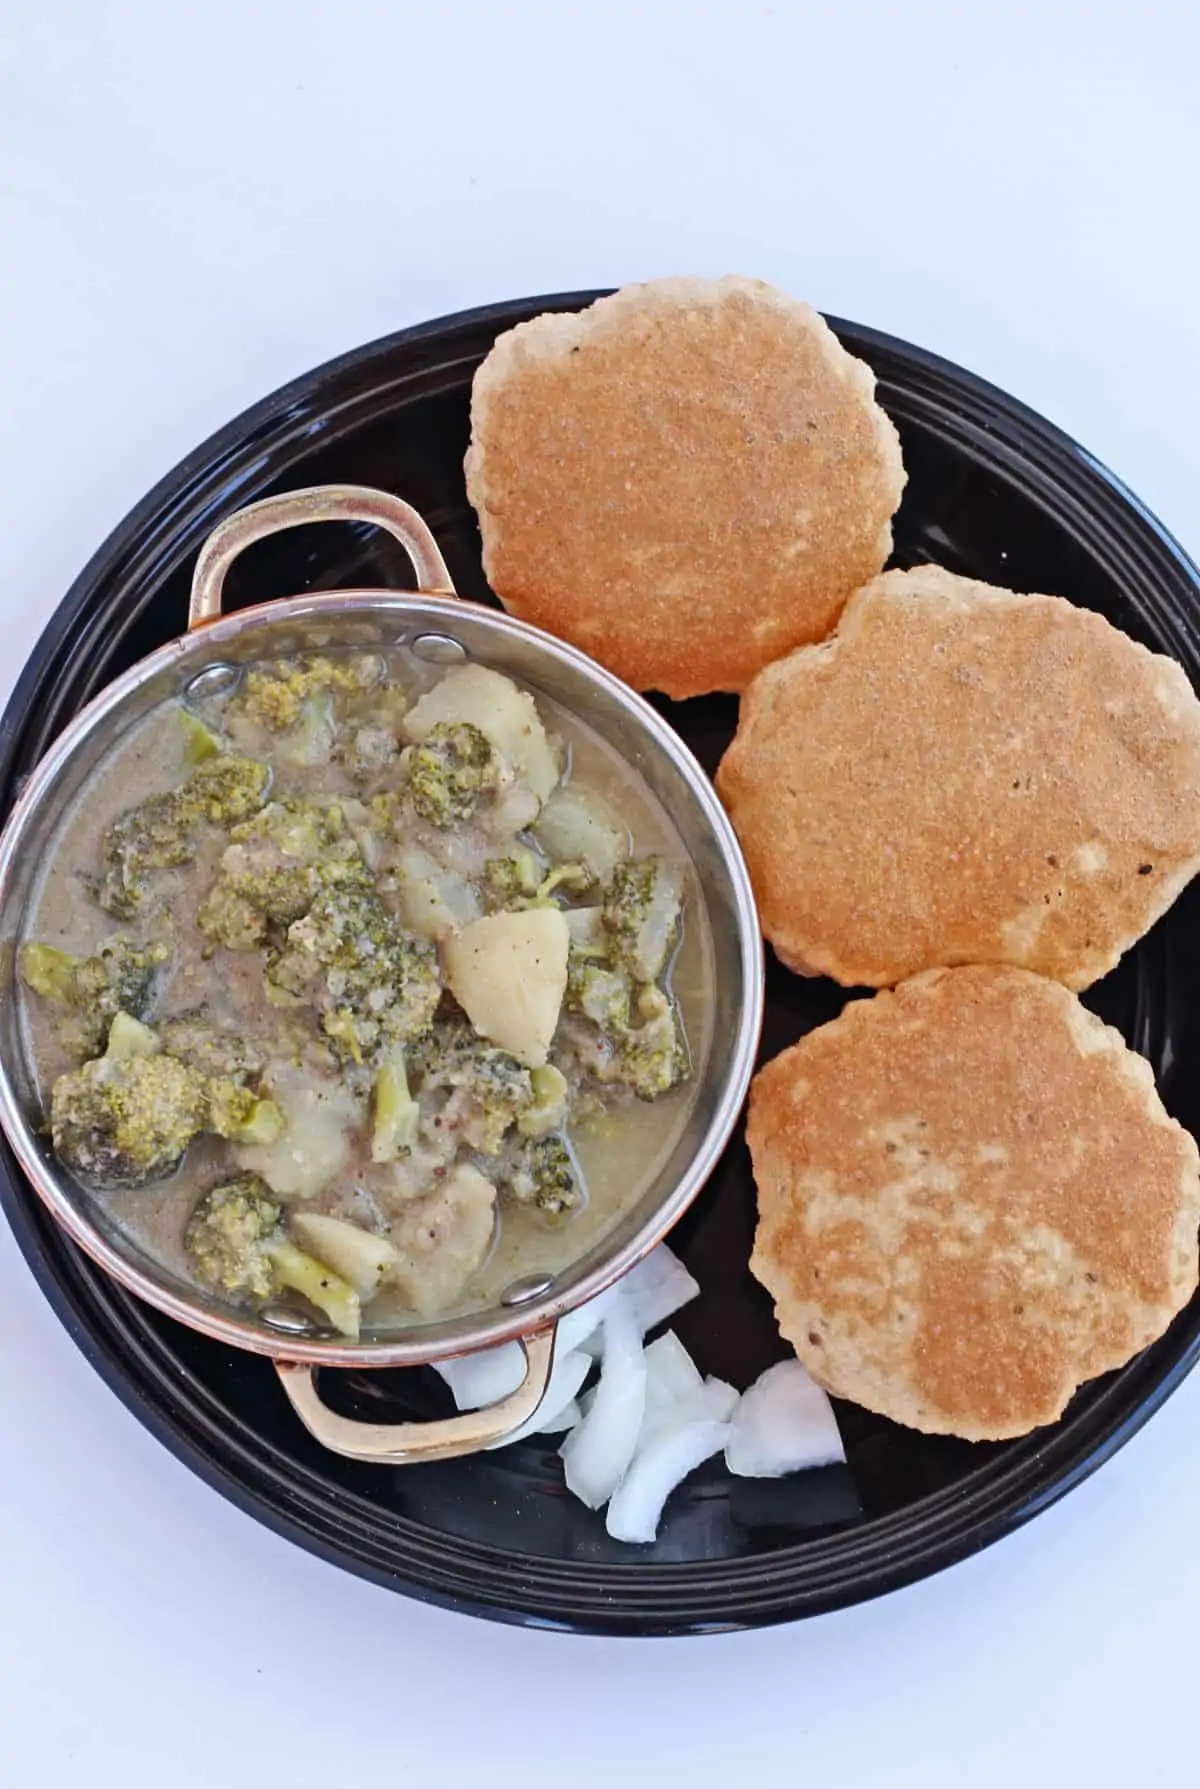 Broccoli and potato kurma with poori and onion pieces in a black playe